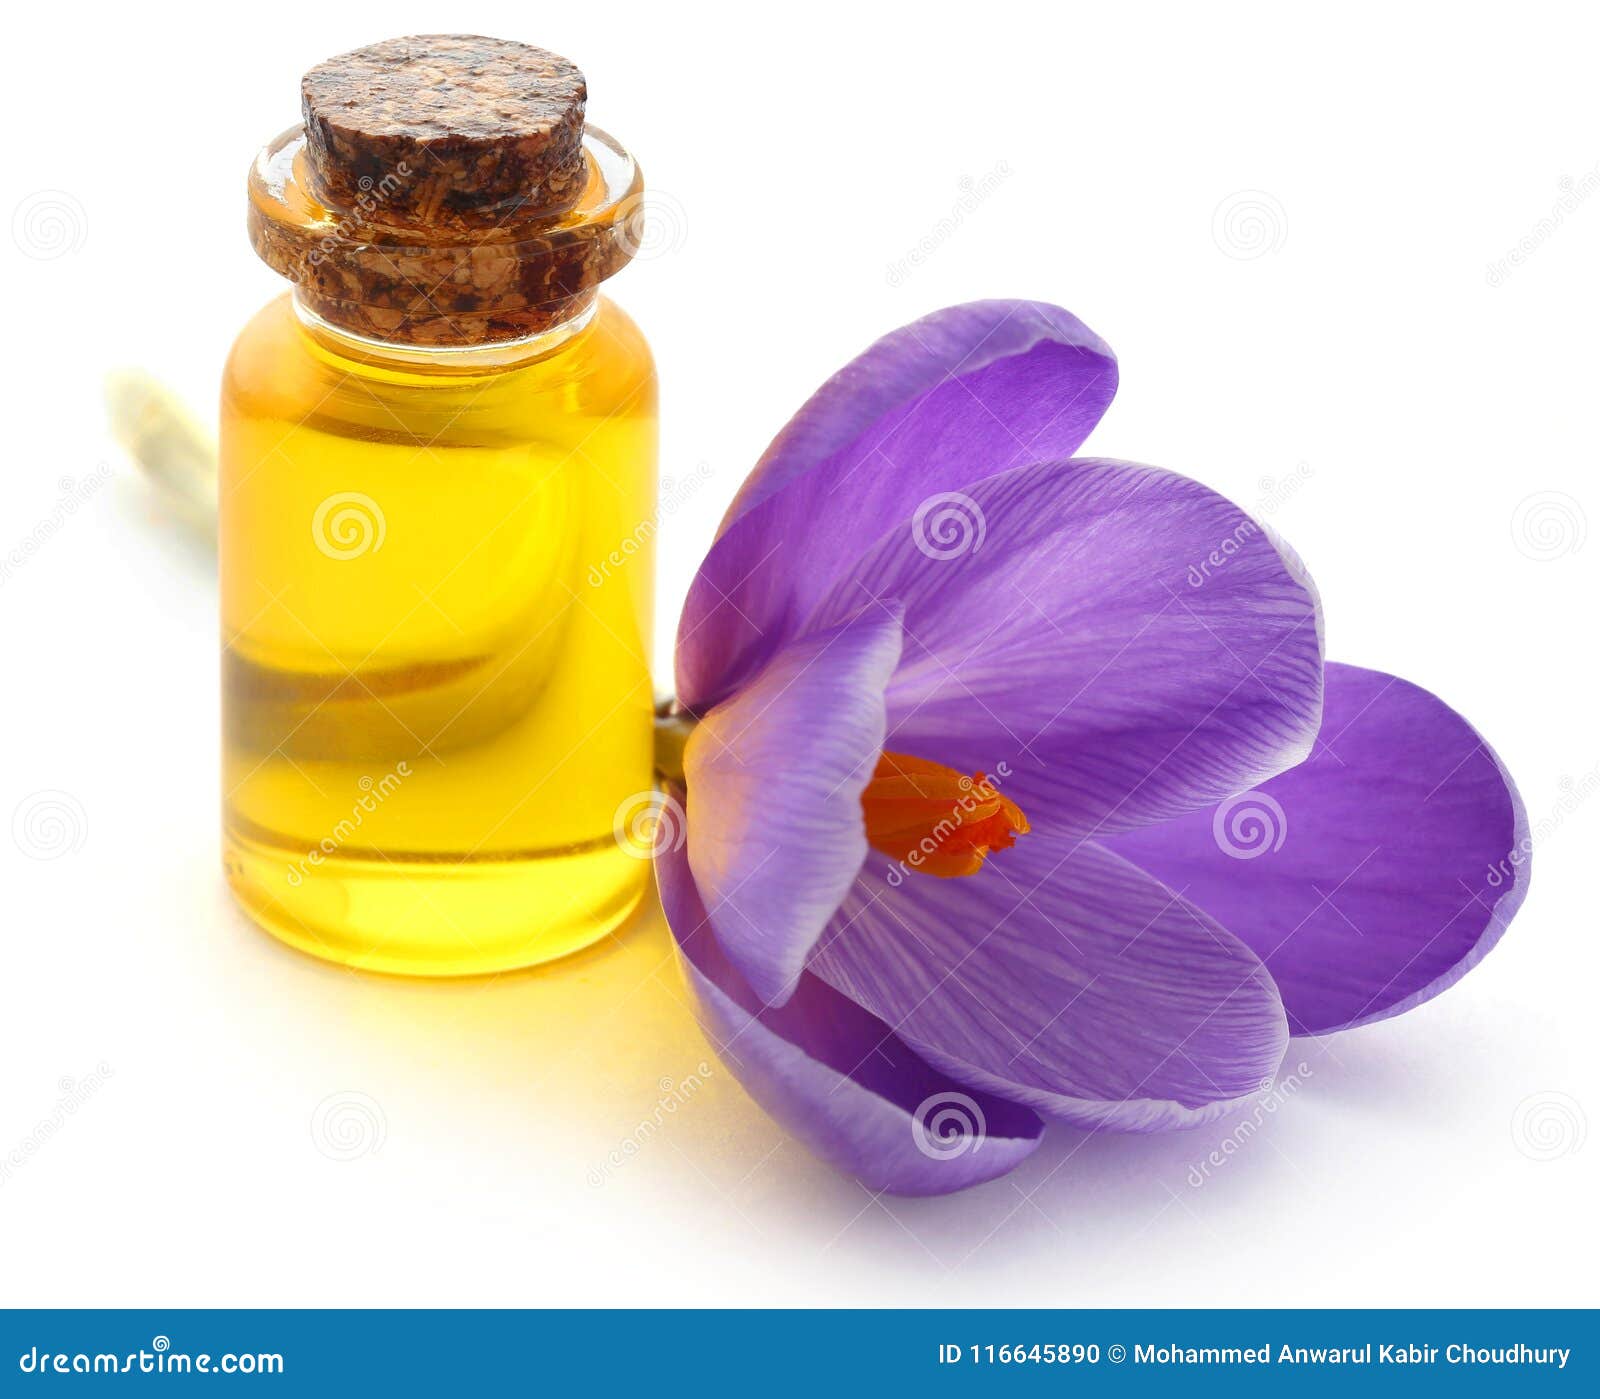 saffron crocus flower with extract